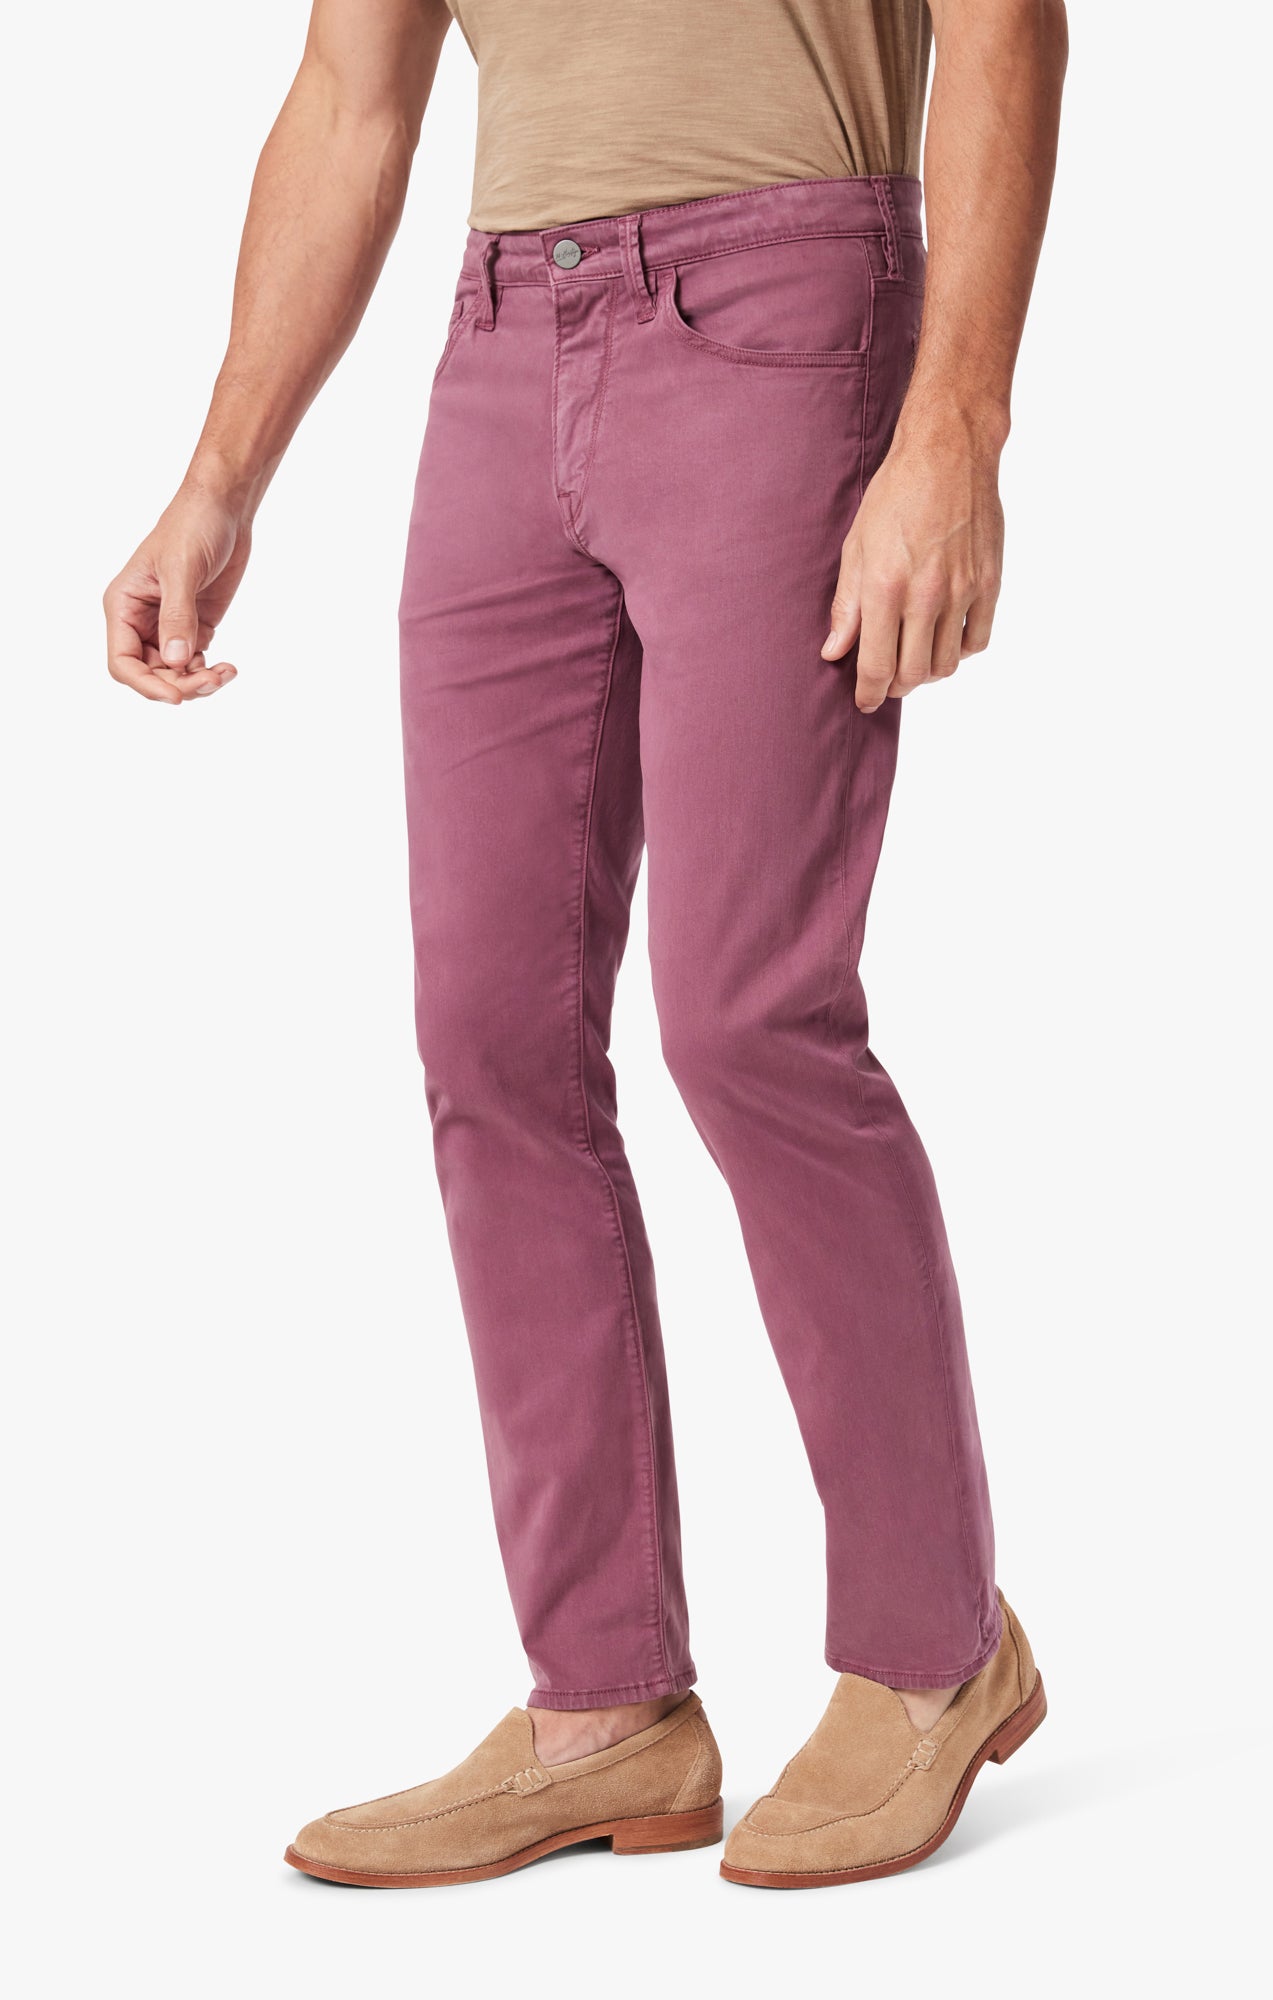 Men's Twill Pants, Chinos & Khaki Pants